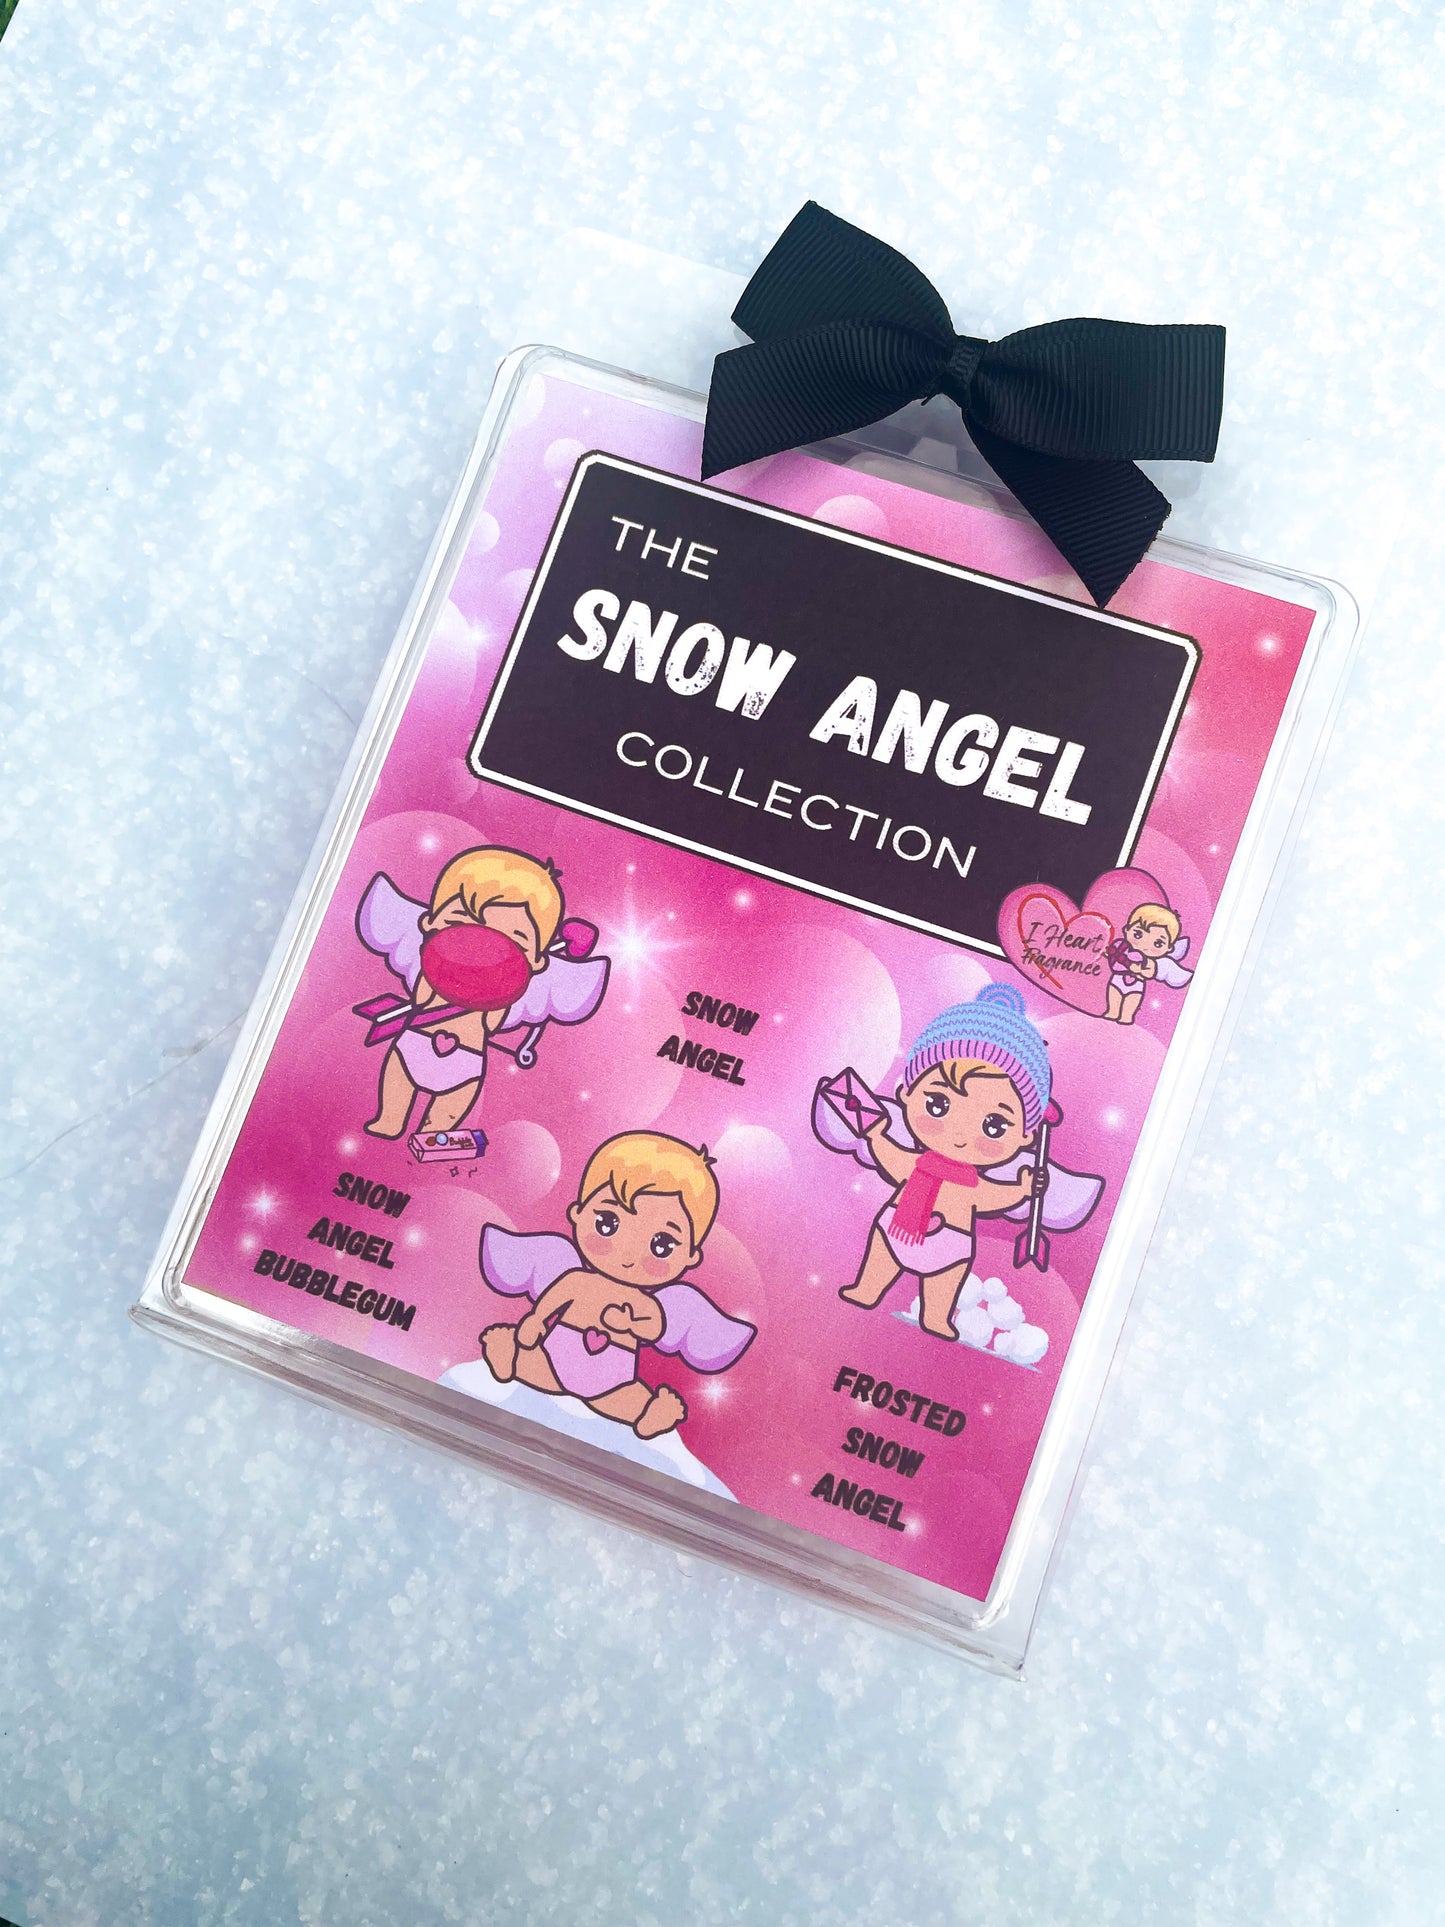 Snow Angel Wax Melt Collection